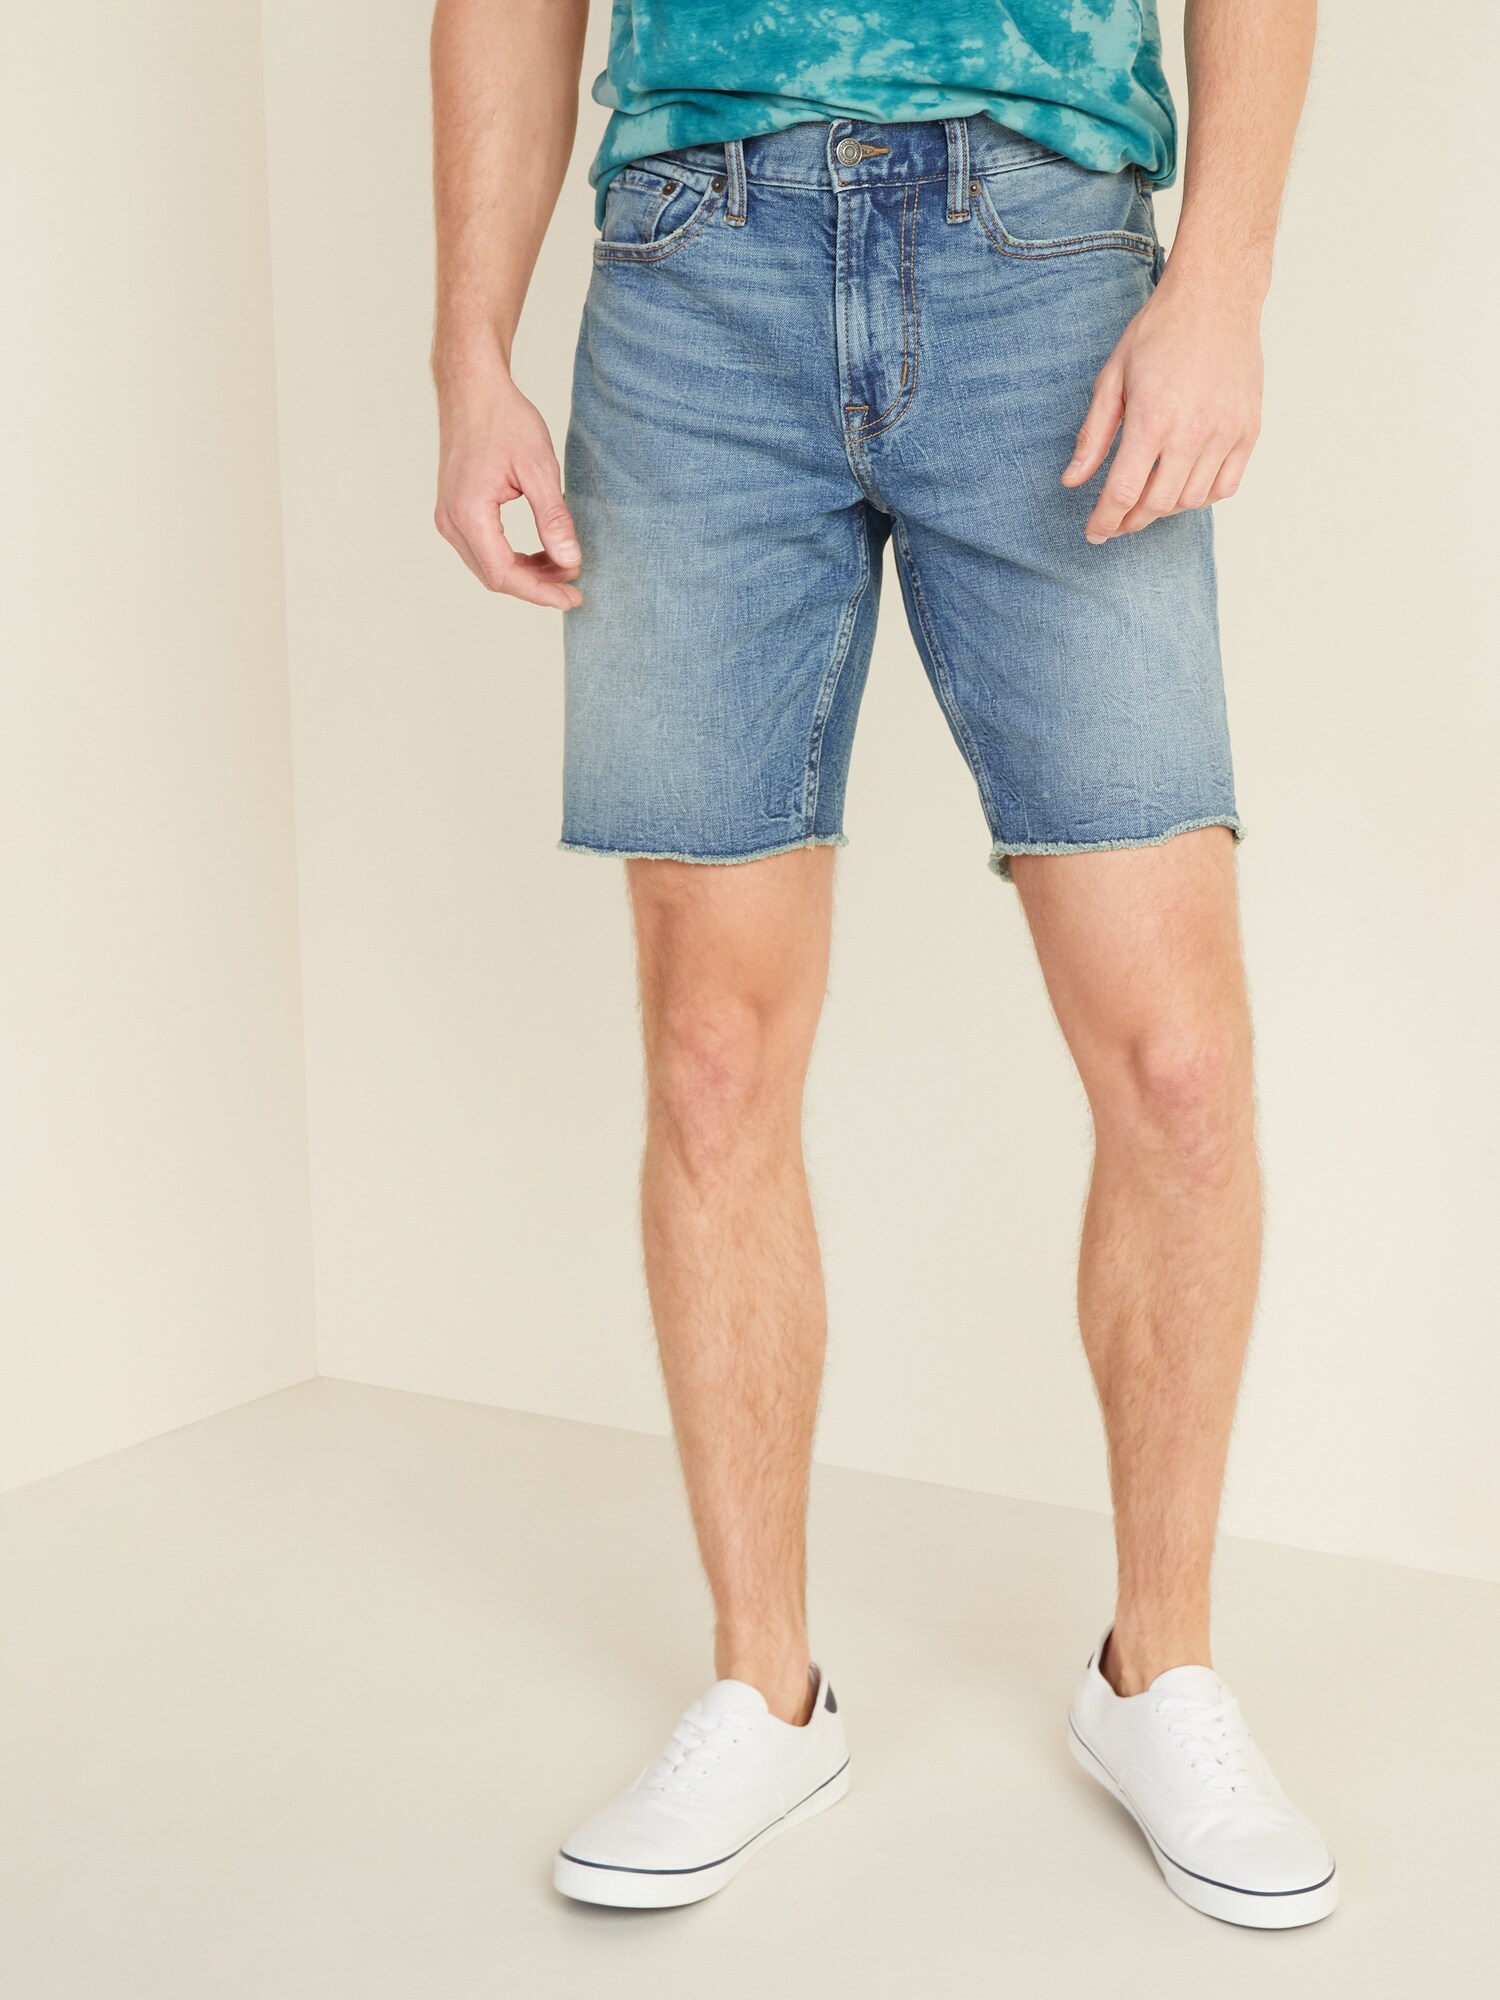 Jean Shorts for Men -- 9.5-inch inseam 